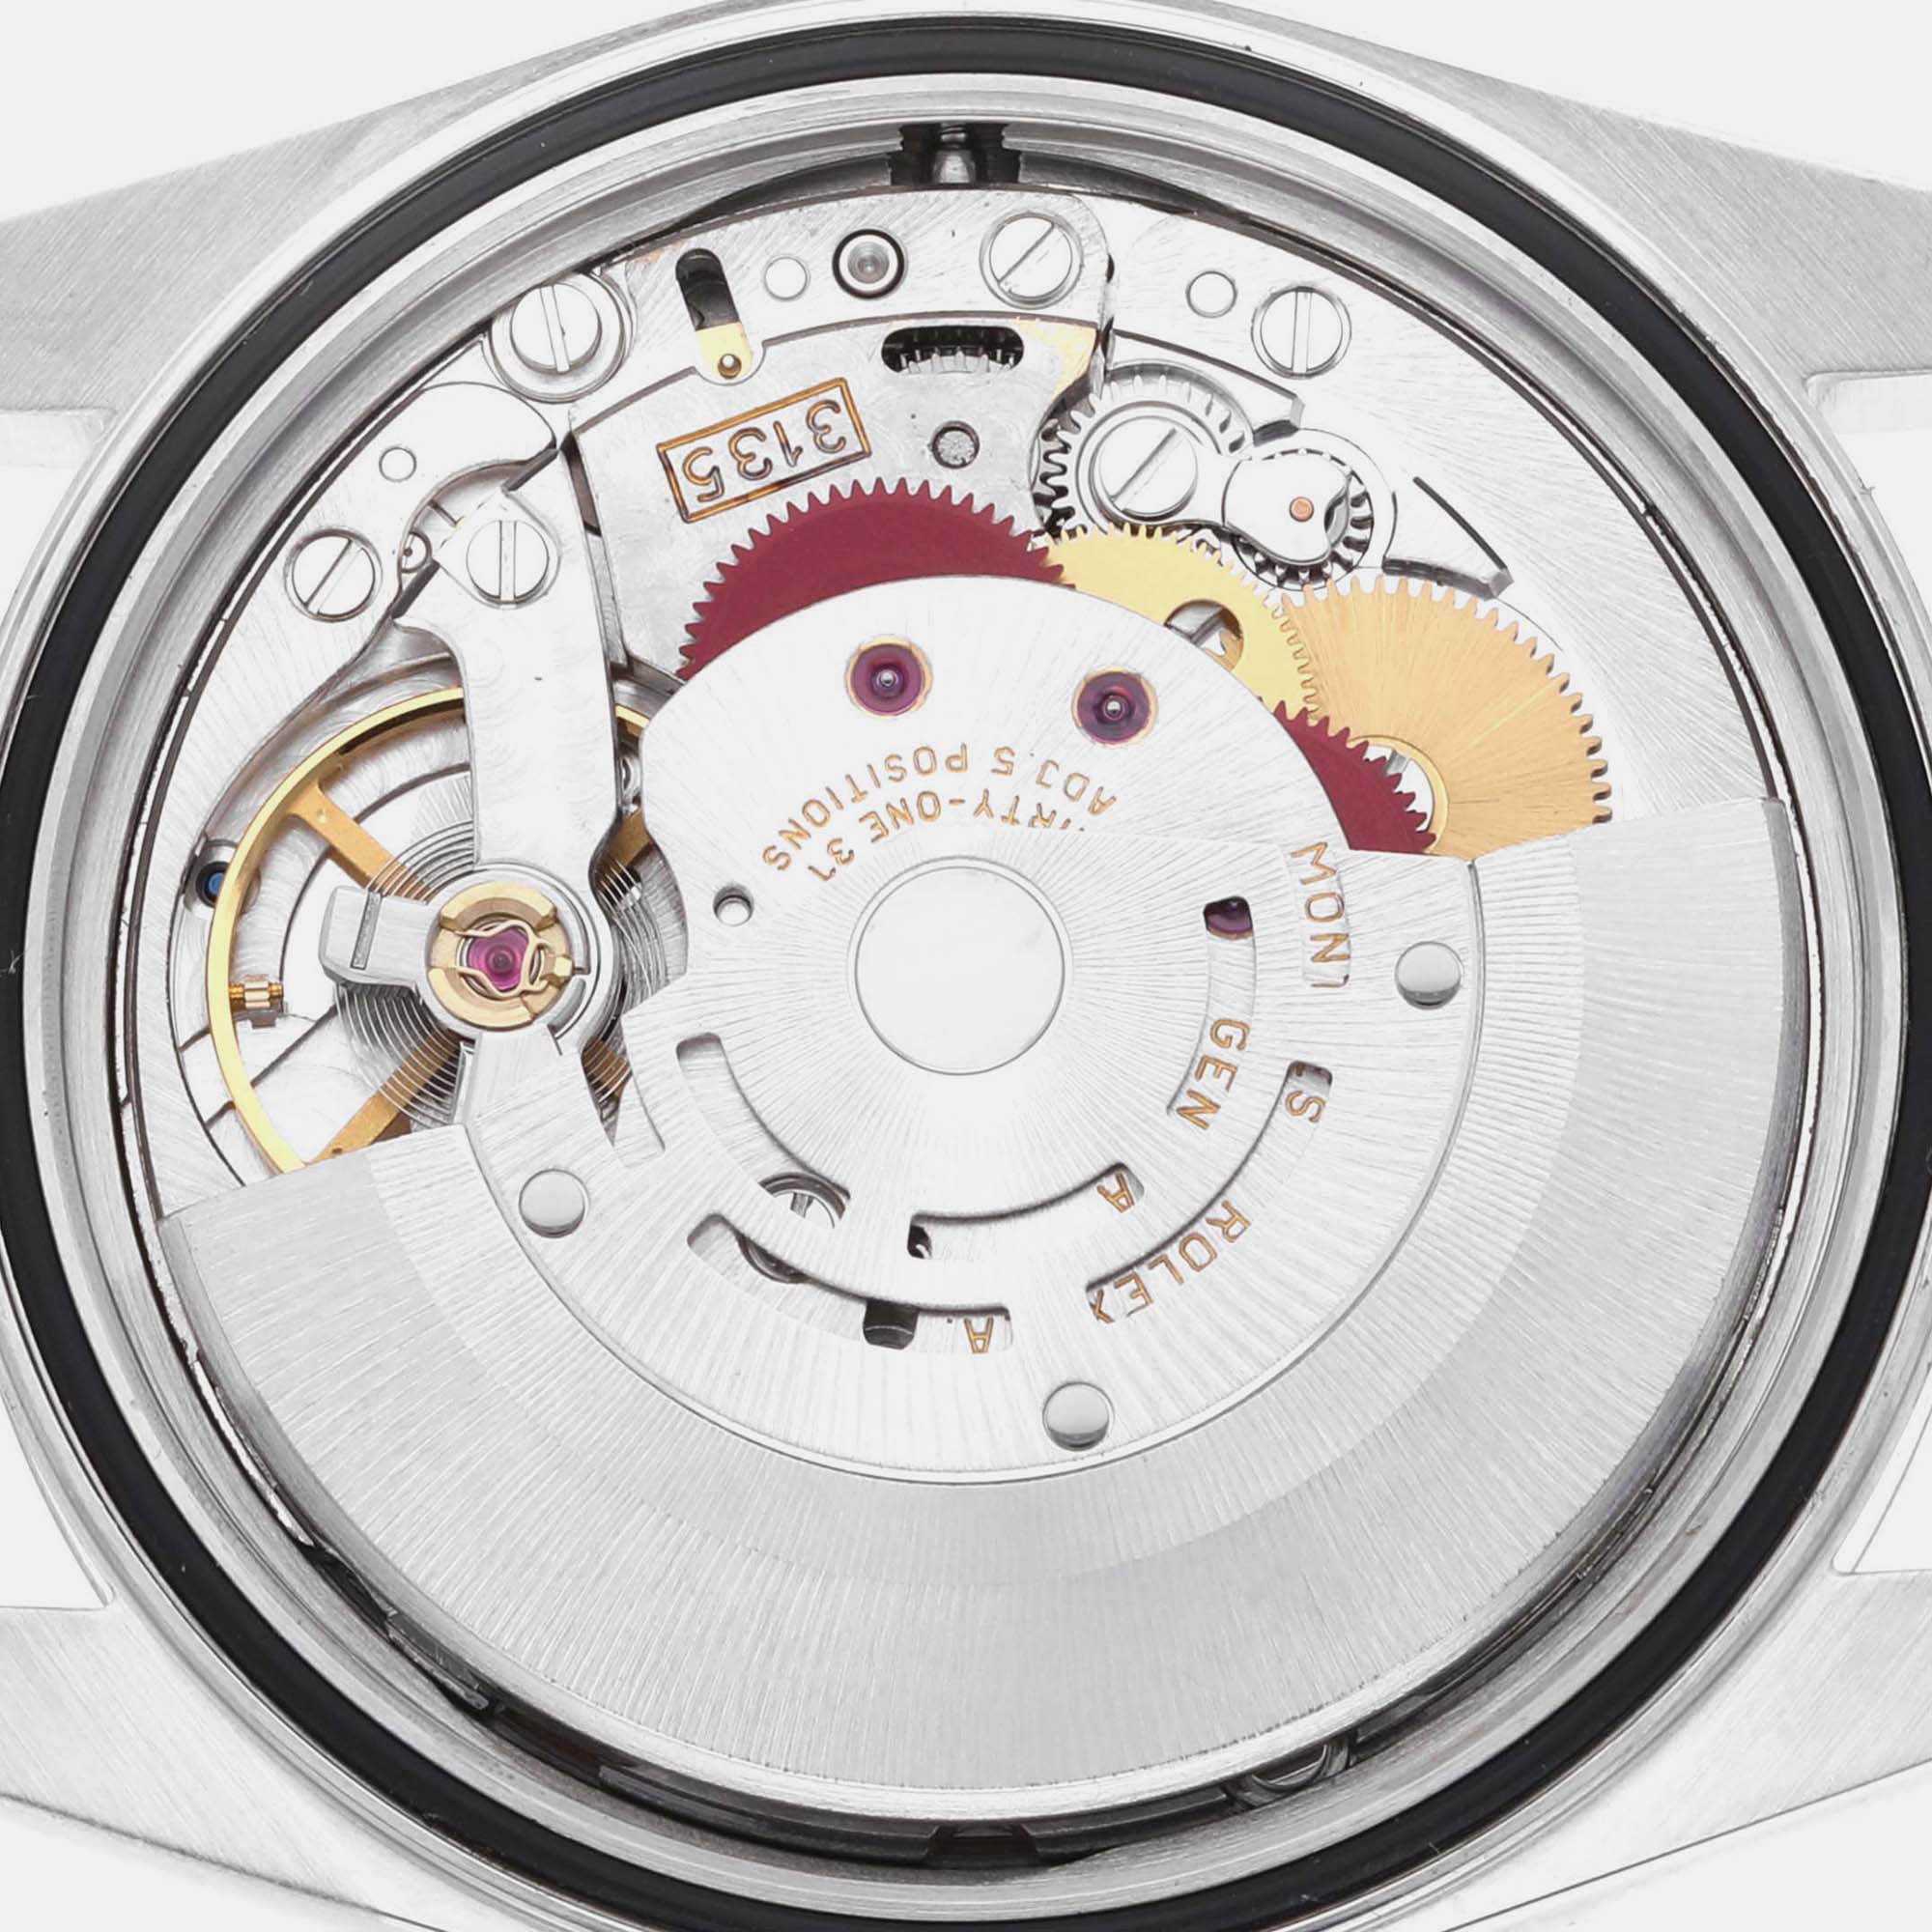 Rolex Datejust Roman Dial Steel White Gold Men's Watch 16234 36 Mm